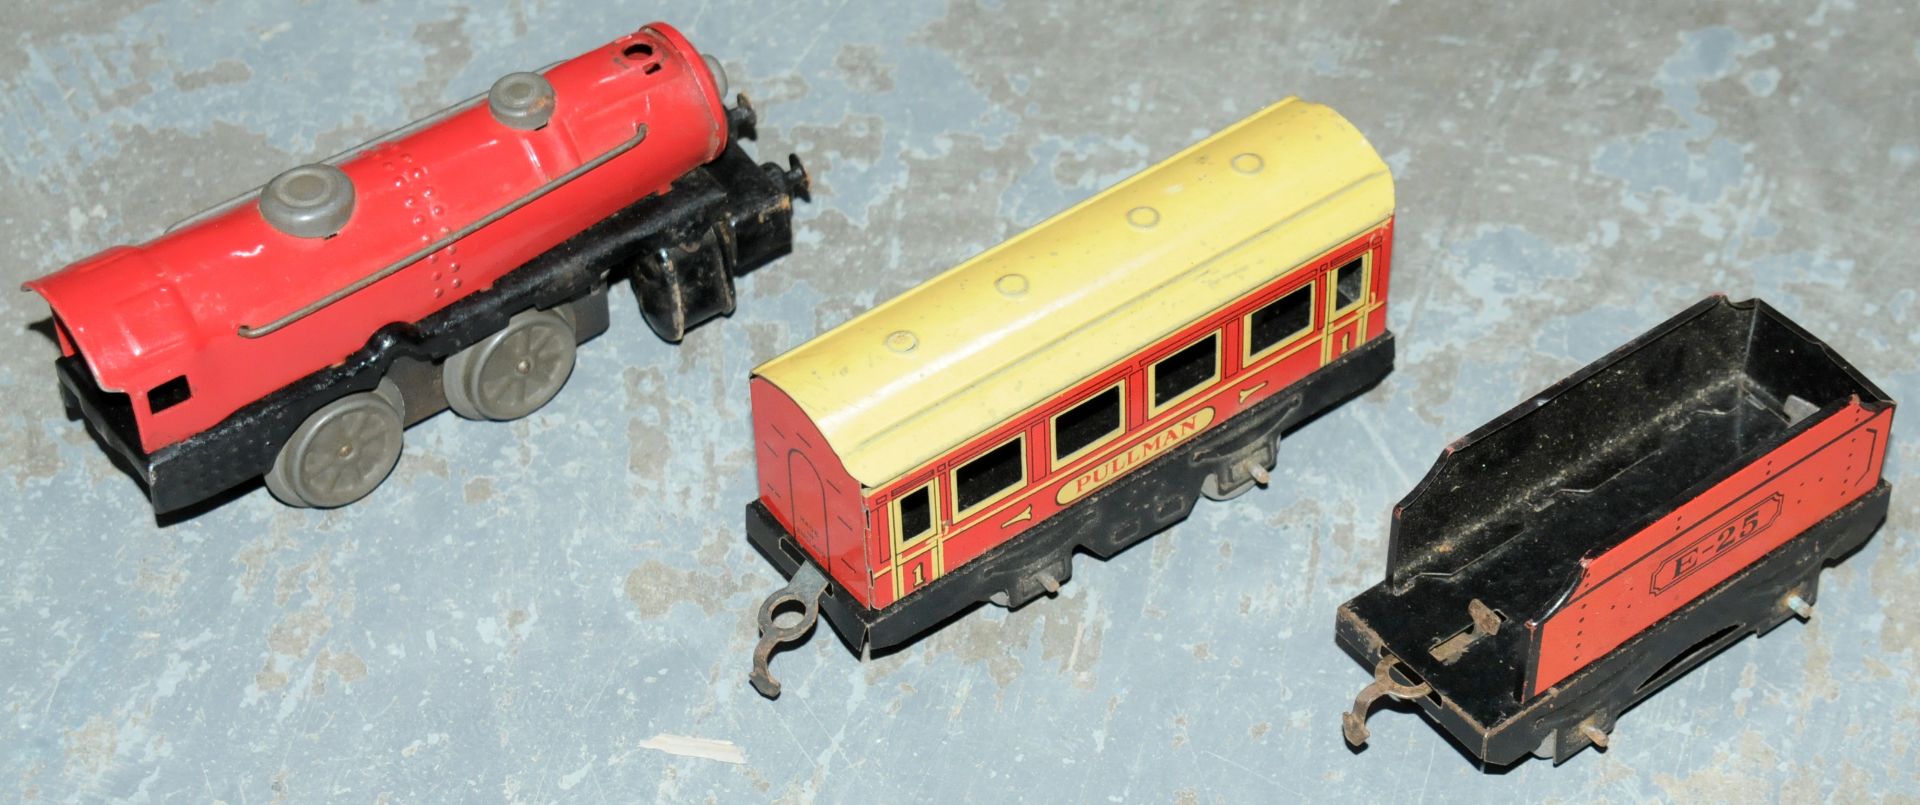 Marx Toys Clockwork Tinplate Trains Set - Image 4 of 6